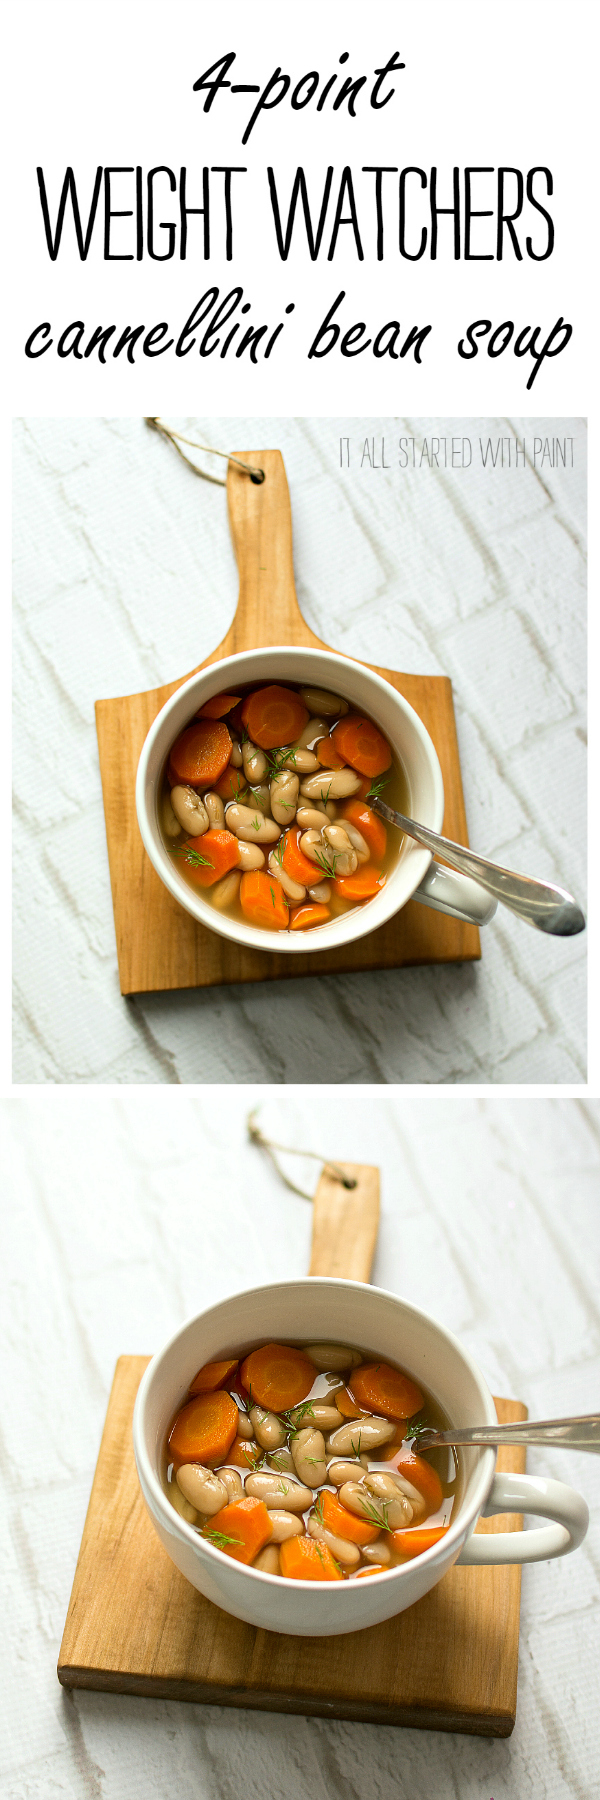 Bean Soup Recipe - Weight Watchers Soup Recipe